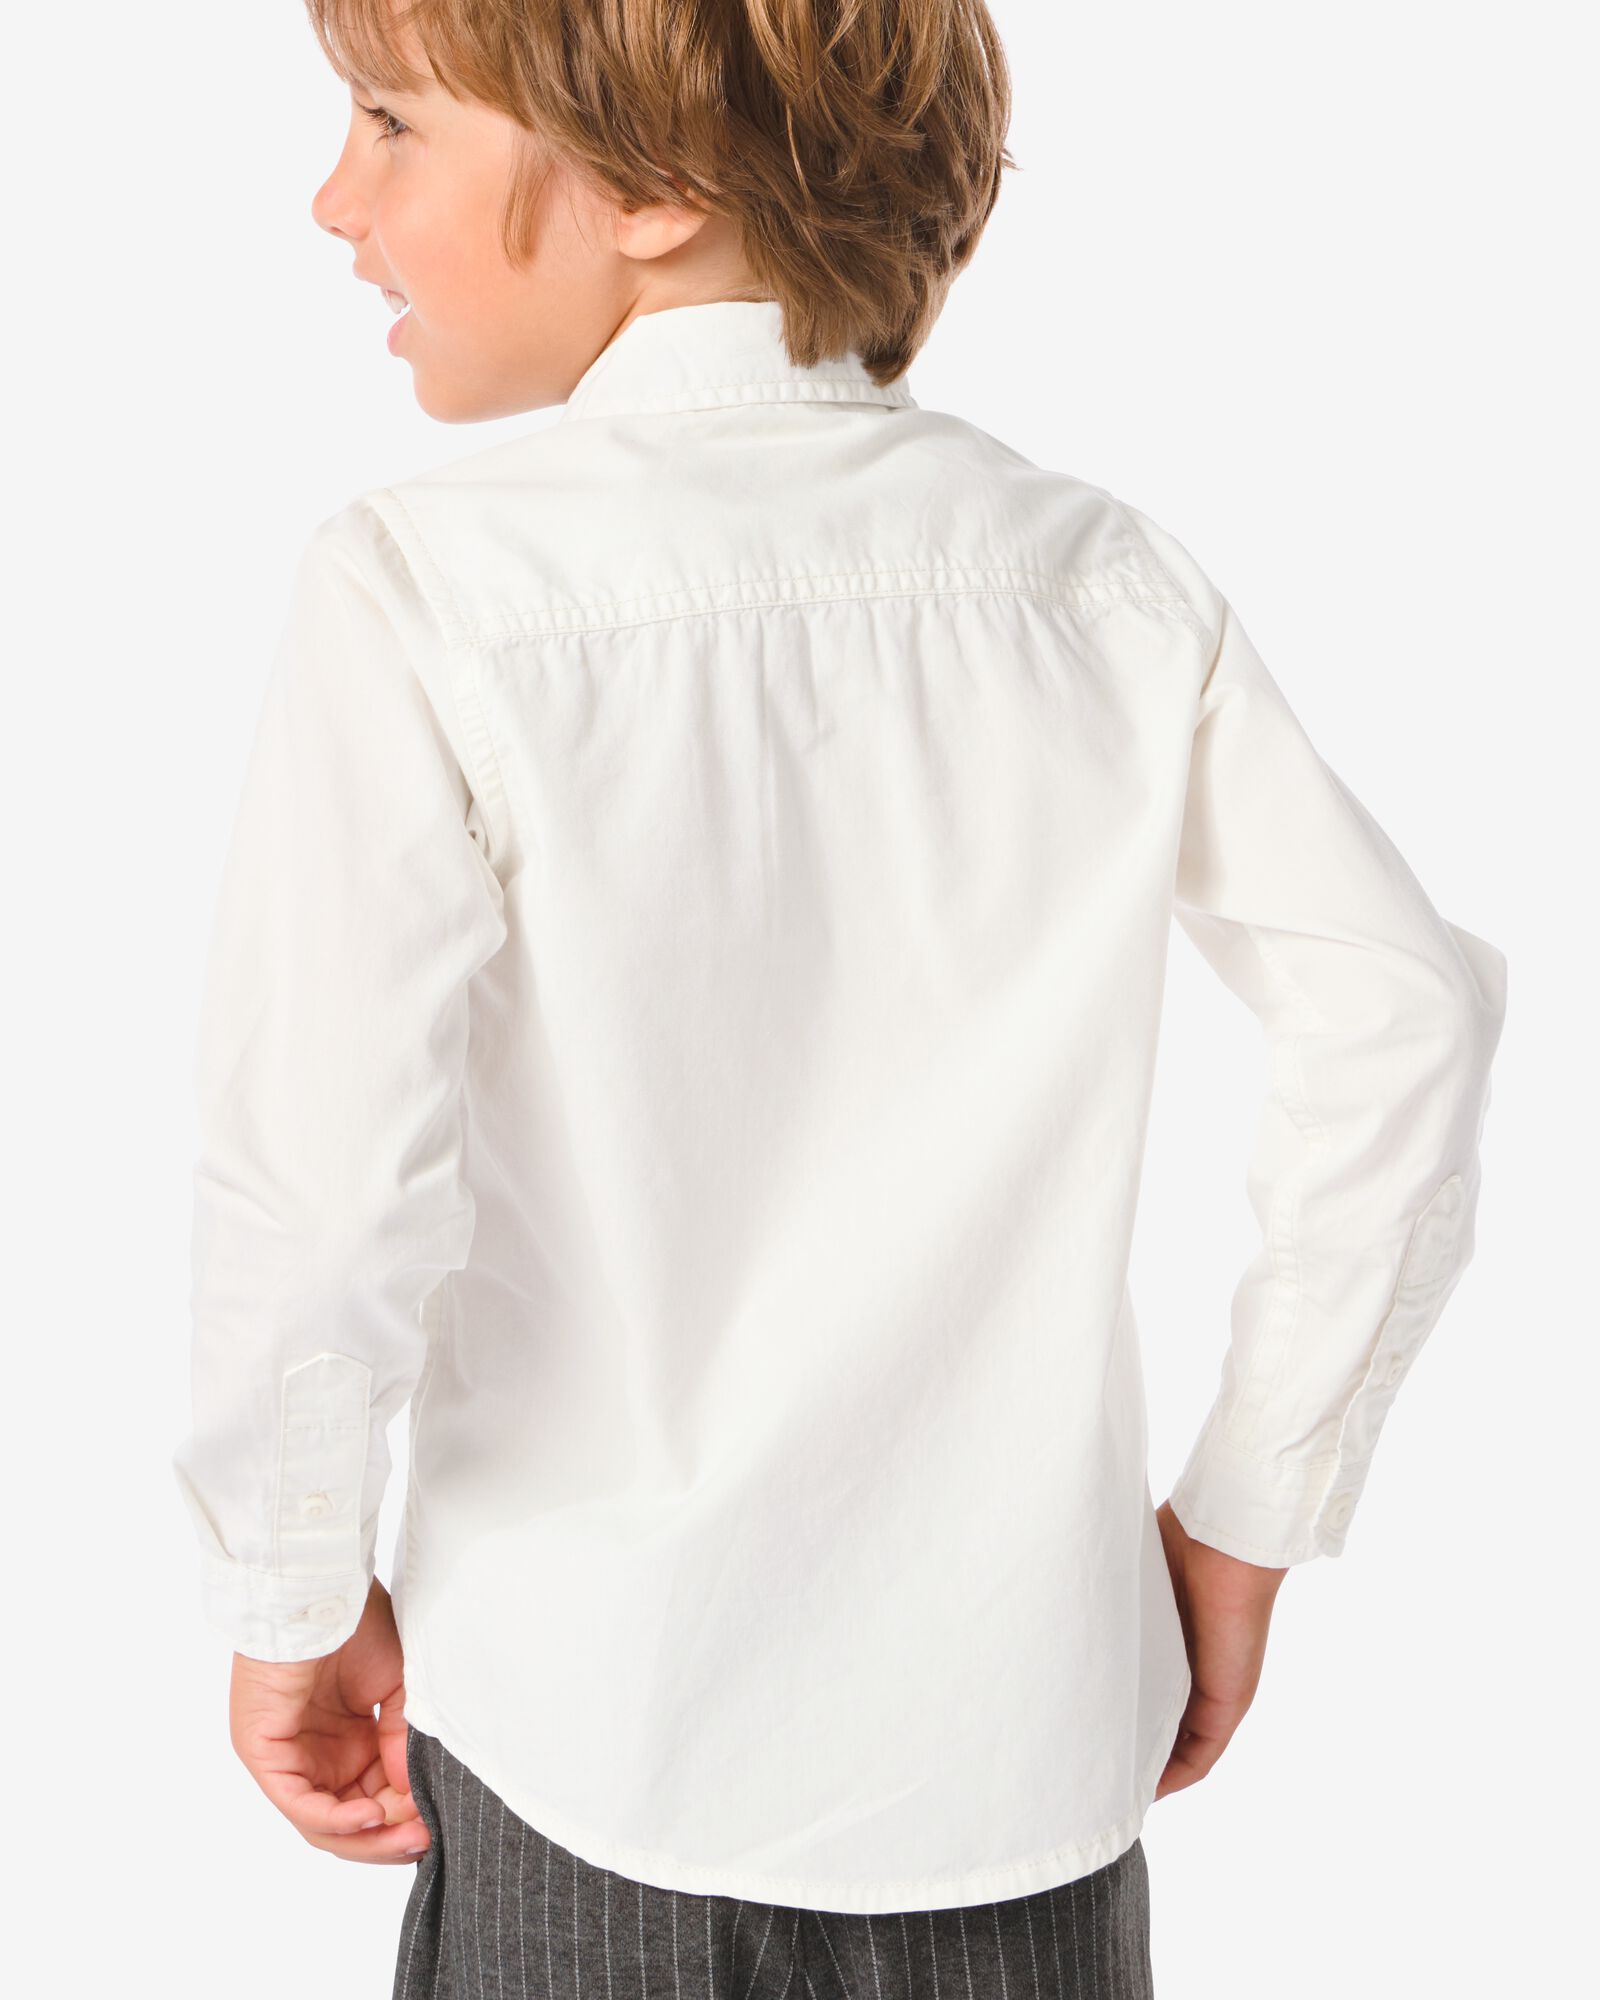 kinder overhemd met vlinderdas wit 110/116 - 30752553 - HEMA